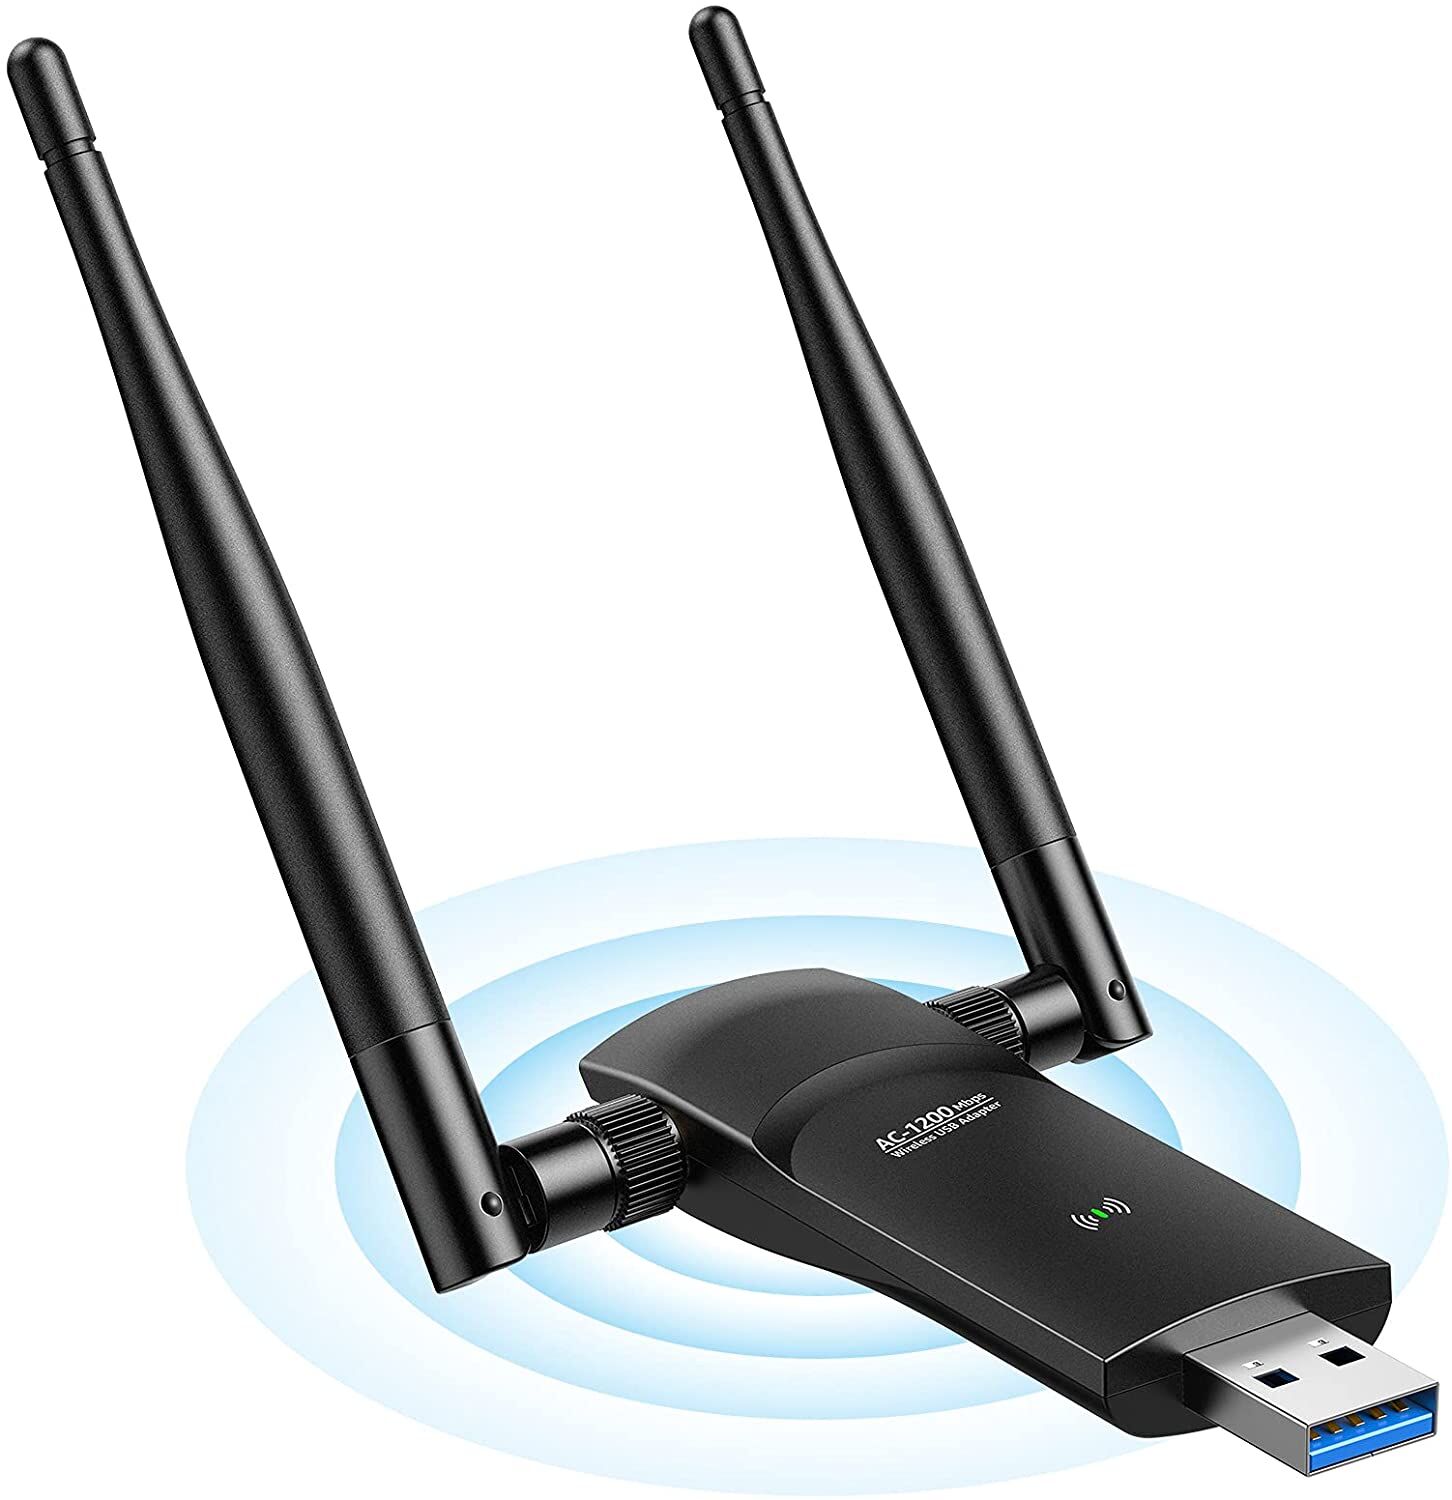 L-Link USB Wireless Network Adapter